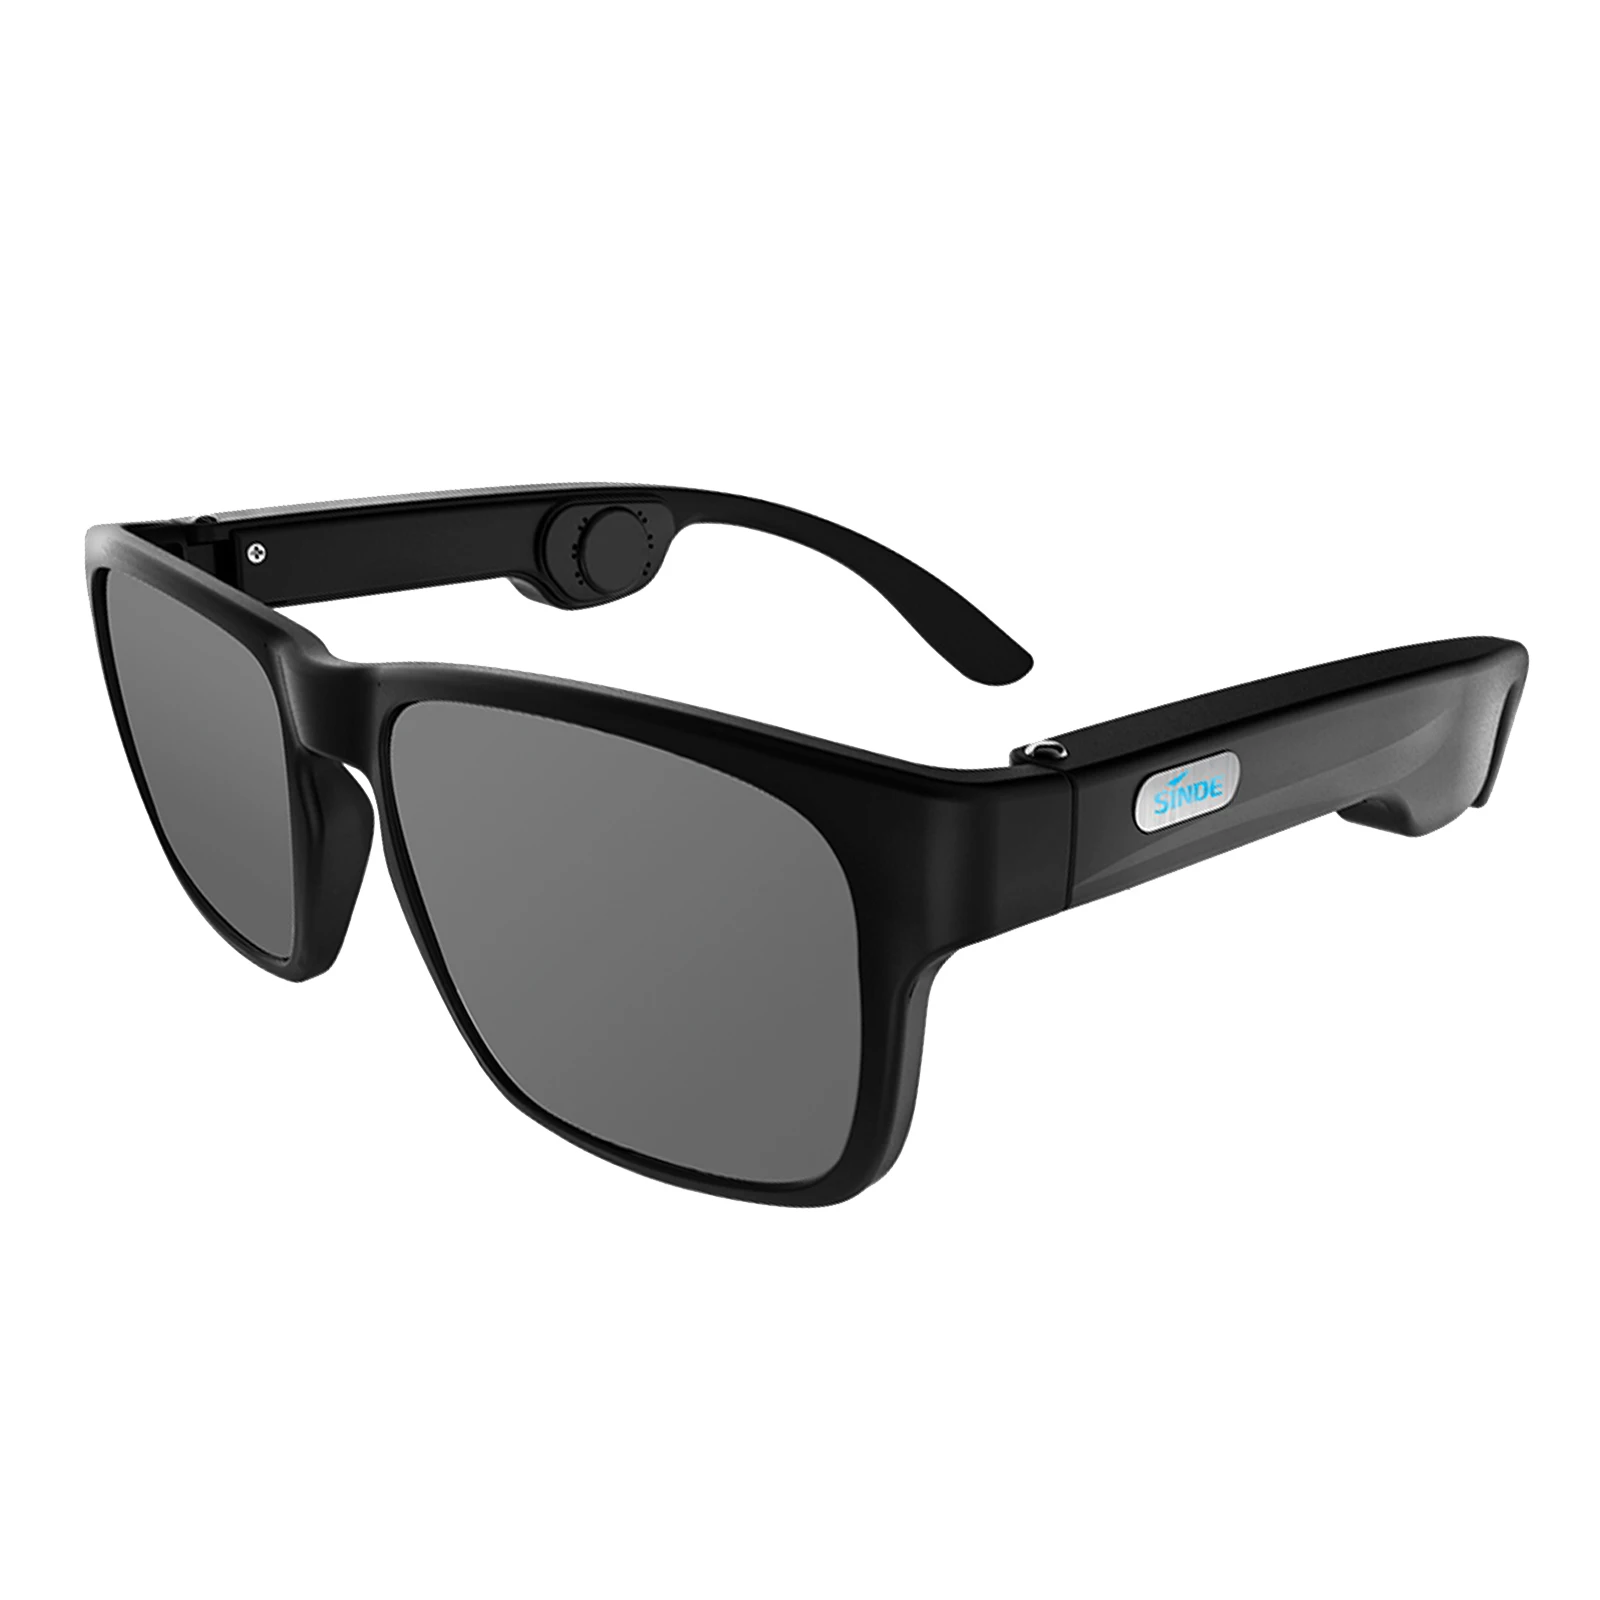 Bone Conduction Glasses Sunglasses Audio Frames Stereo Bluetooth Wireless Earphones